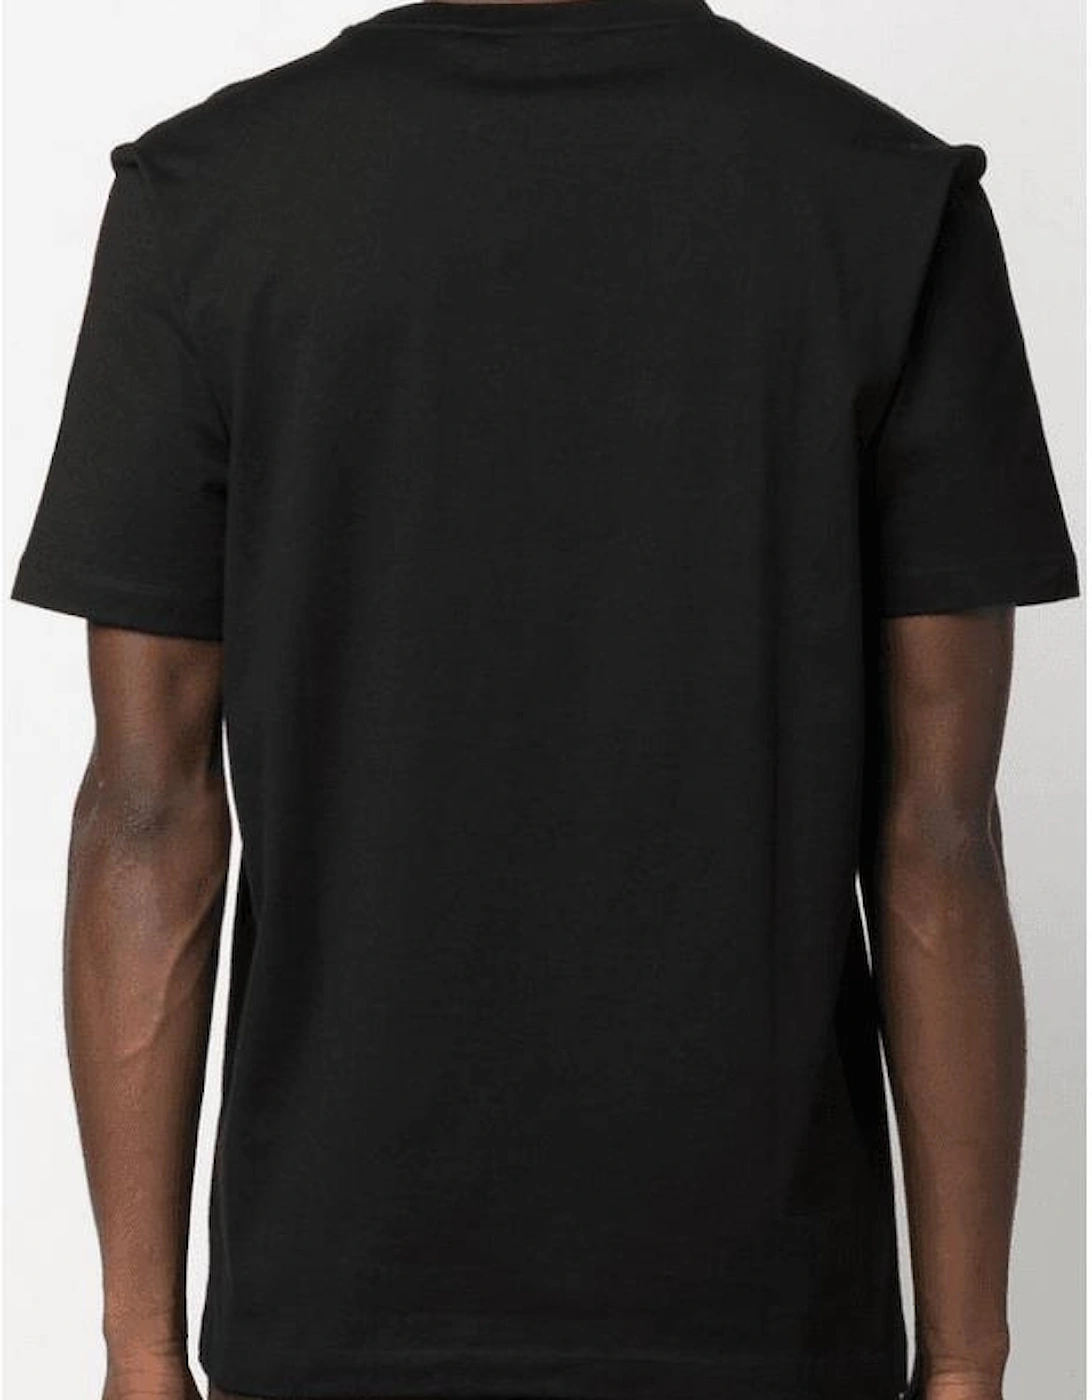 Tilburt 354 Regular Fit Black T-Shirt